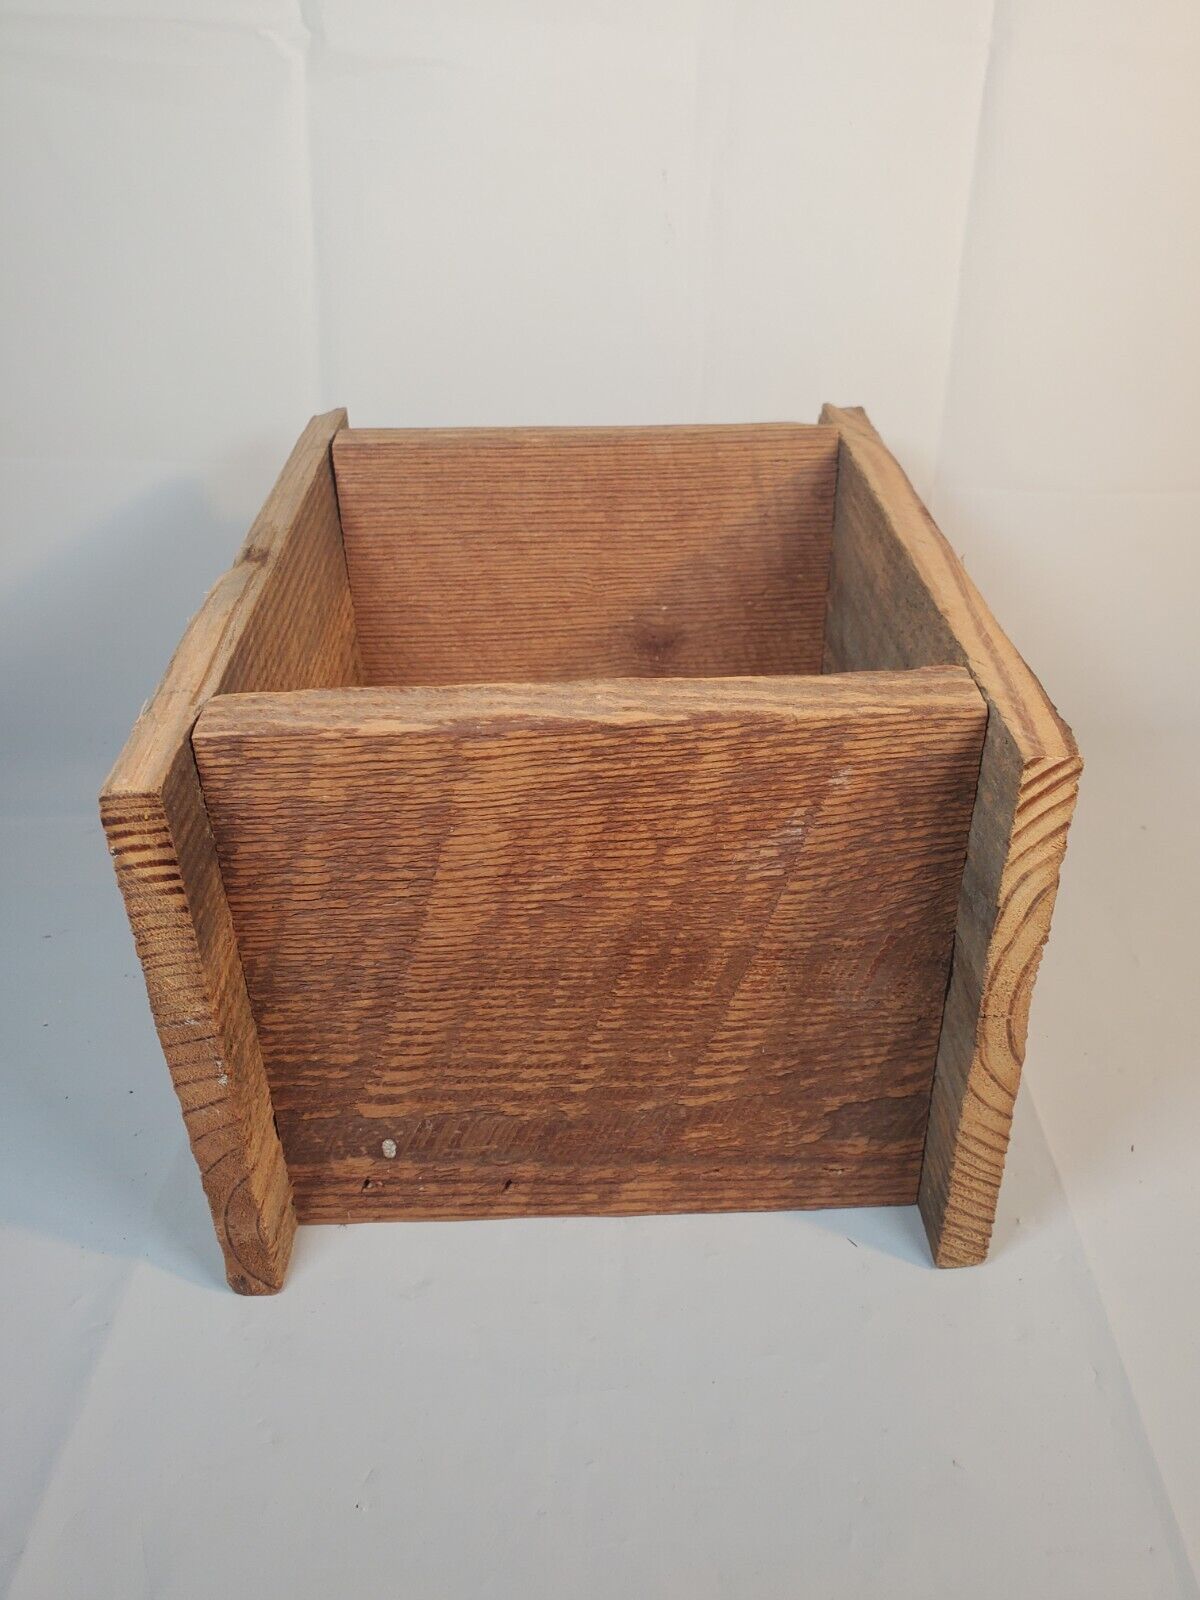 Primitive Antique Wooden Box With Some Patina | Farmhouse Decor | Storage Misc